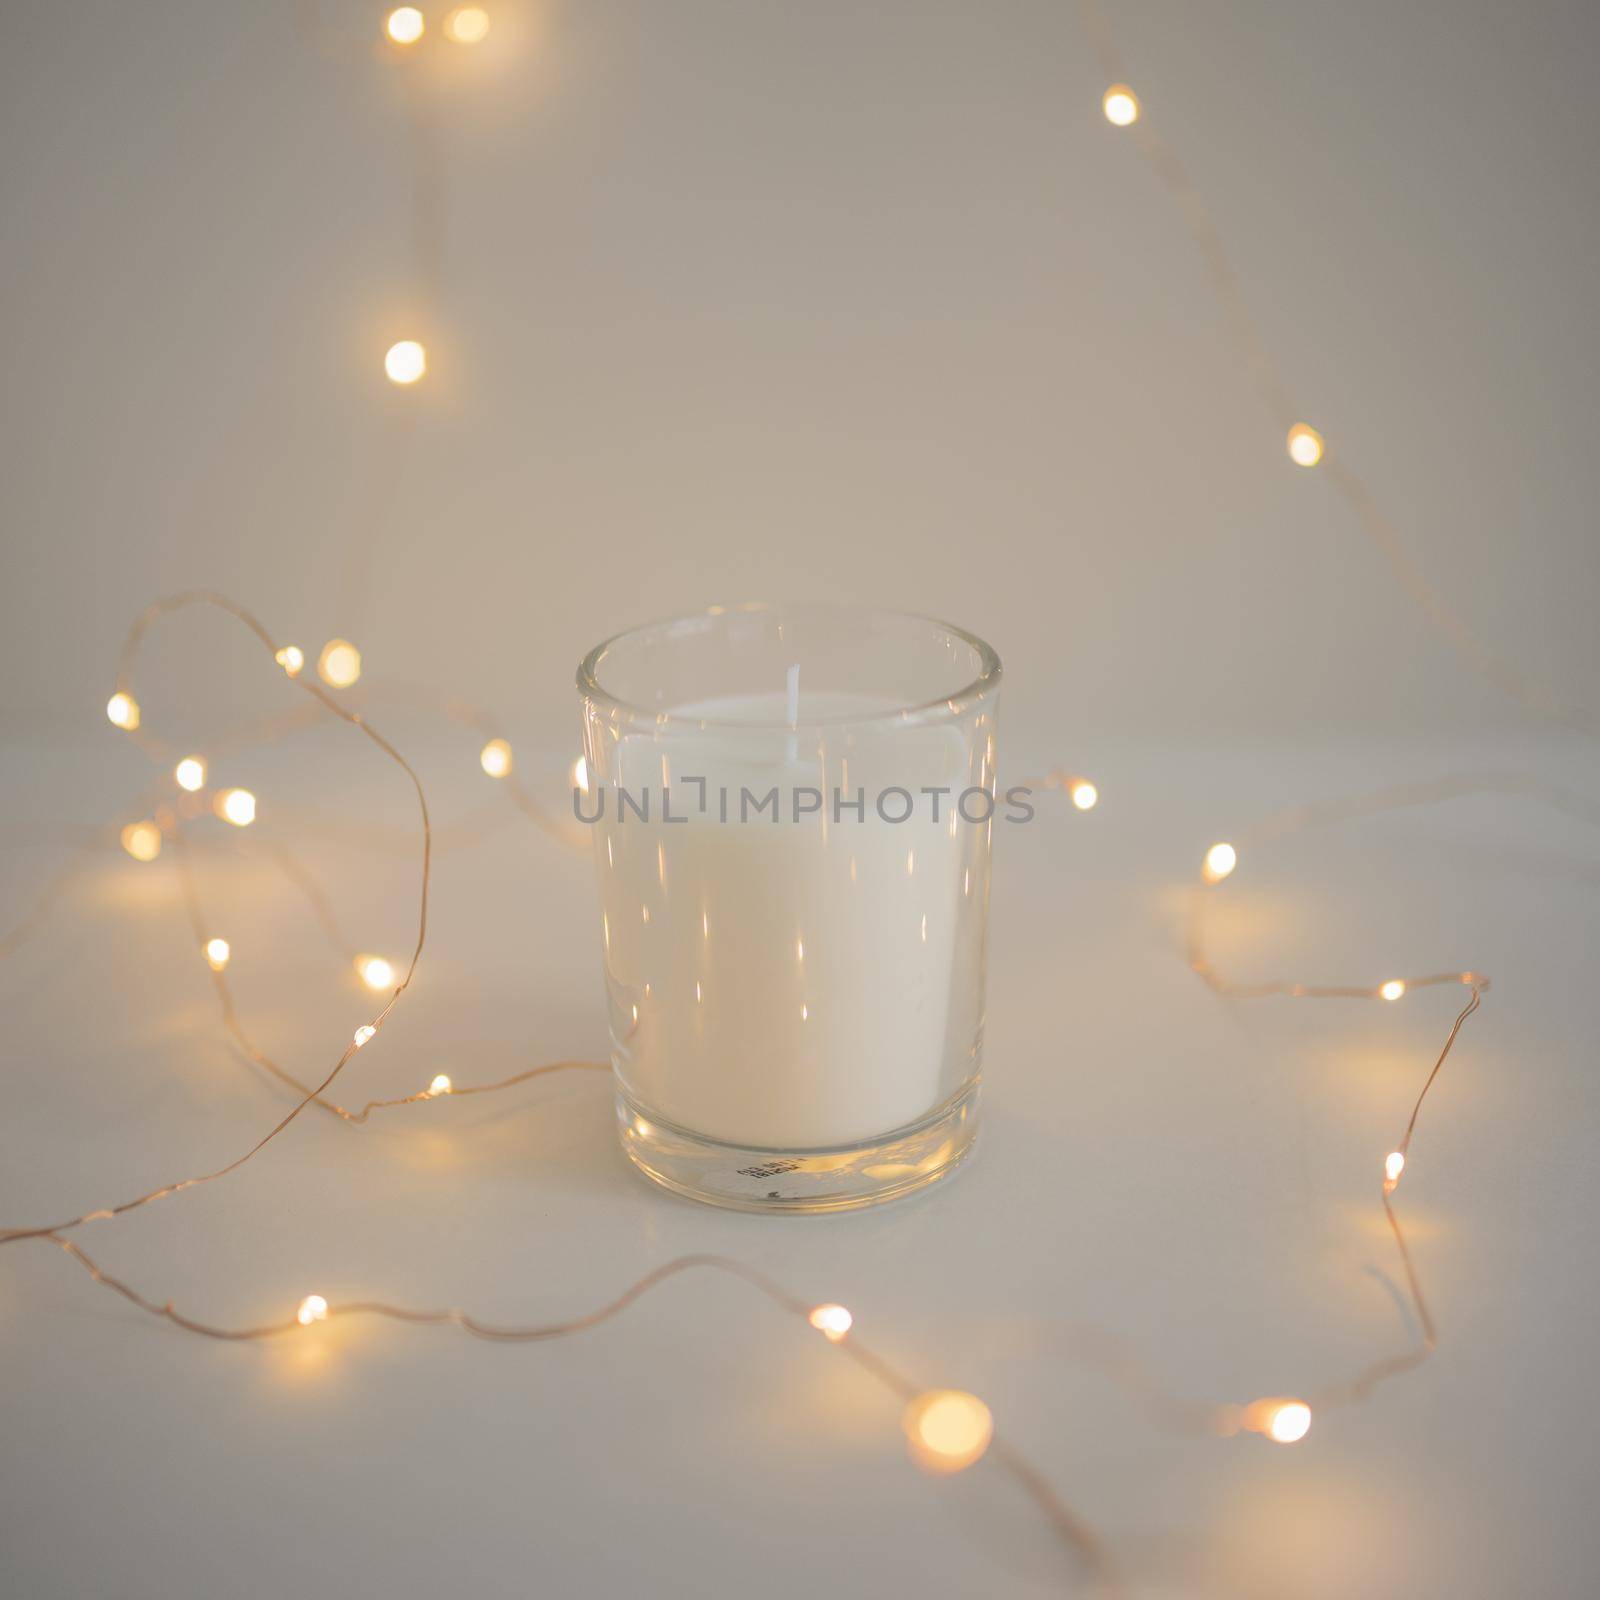 decoration fairy lights around glass candleholder by Zahard